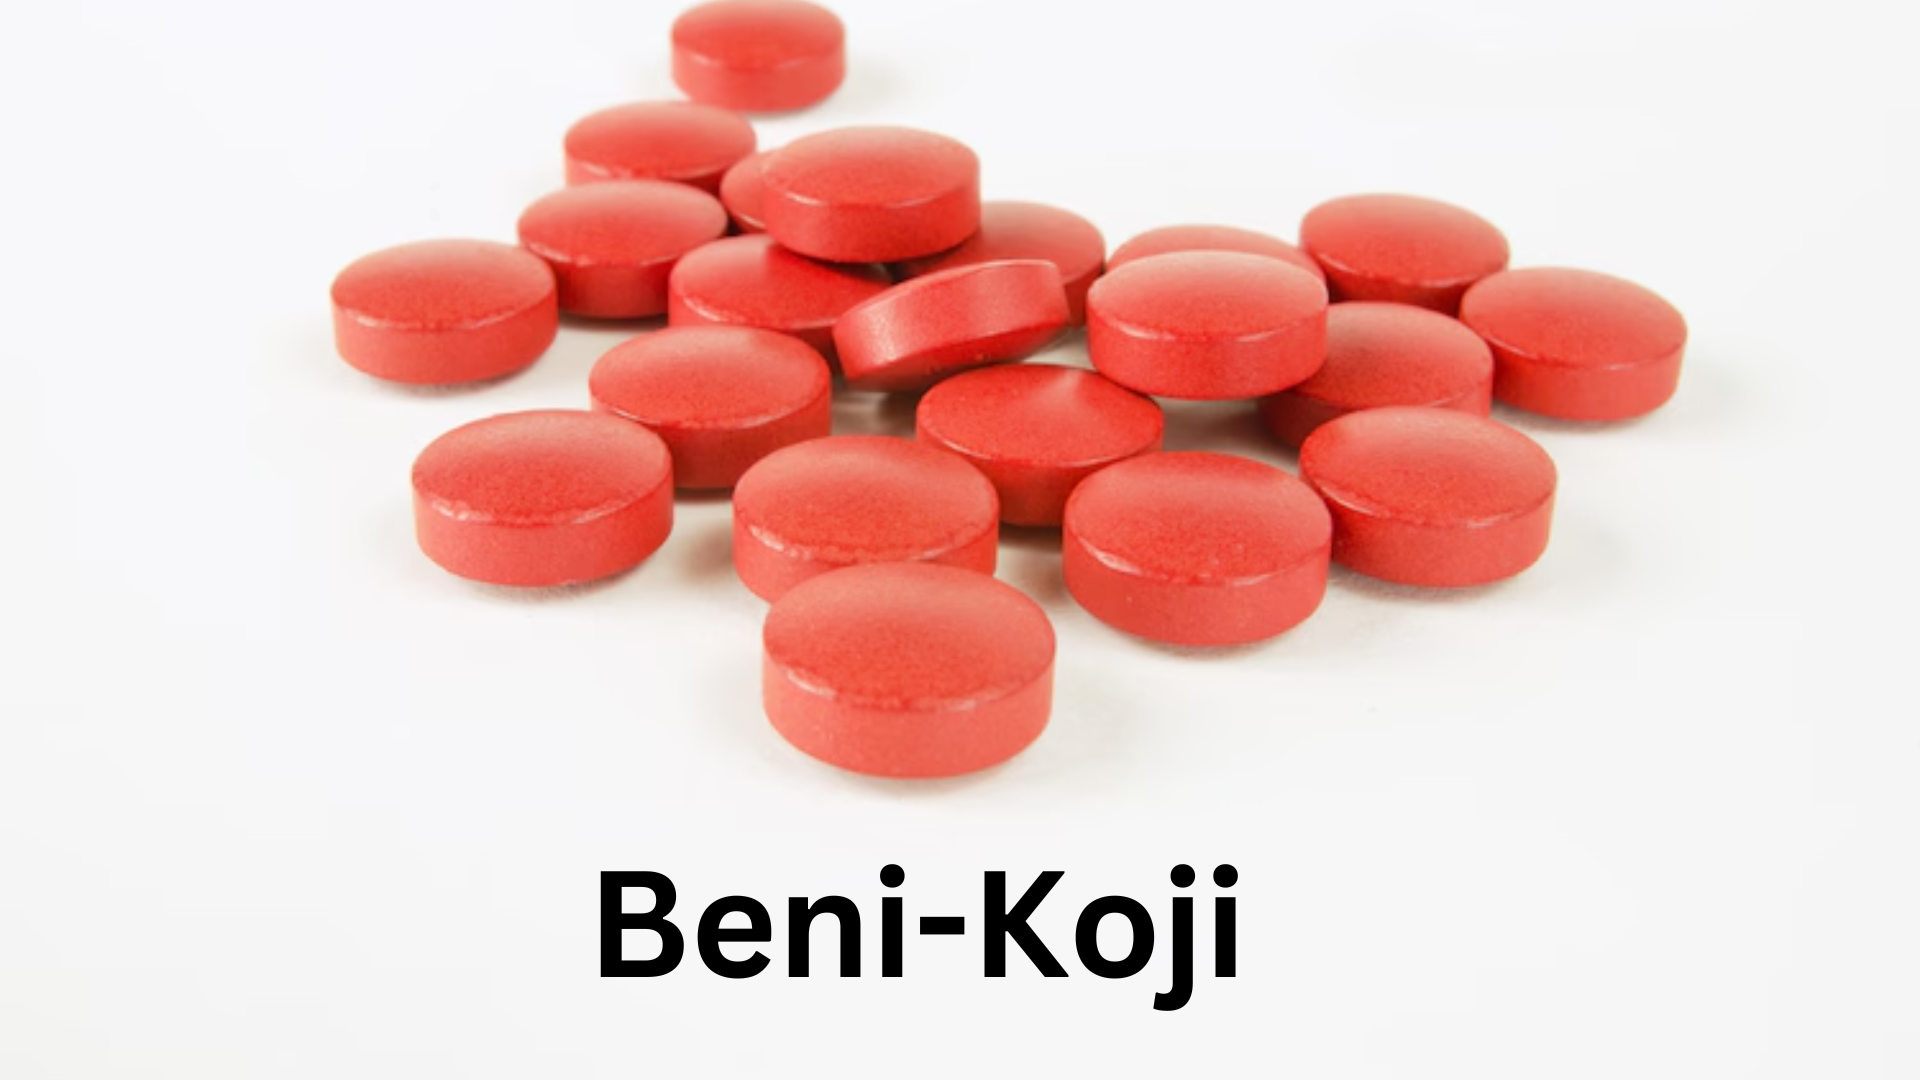 Understanding Beni-Koji: The Japanese Health Supplement Linked To 5 Deaths